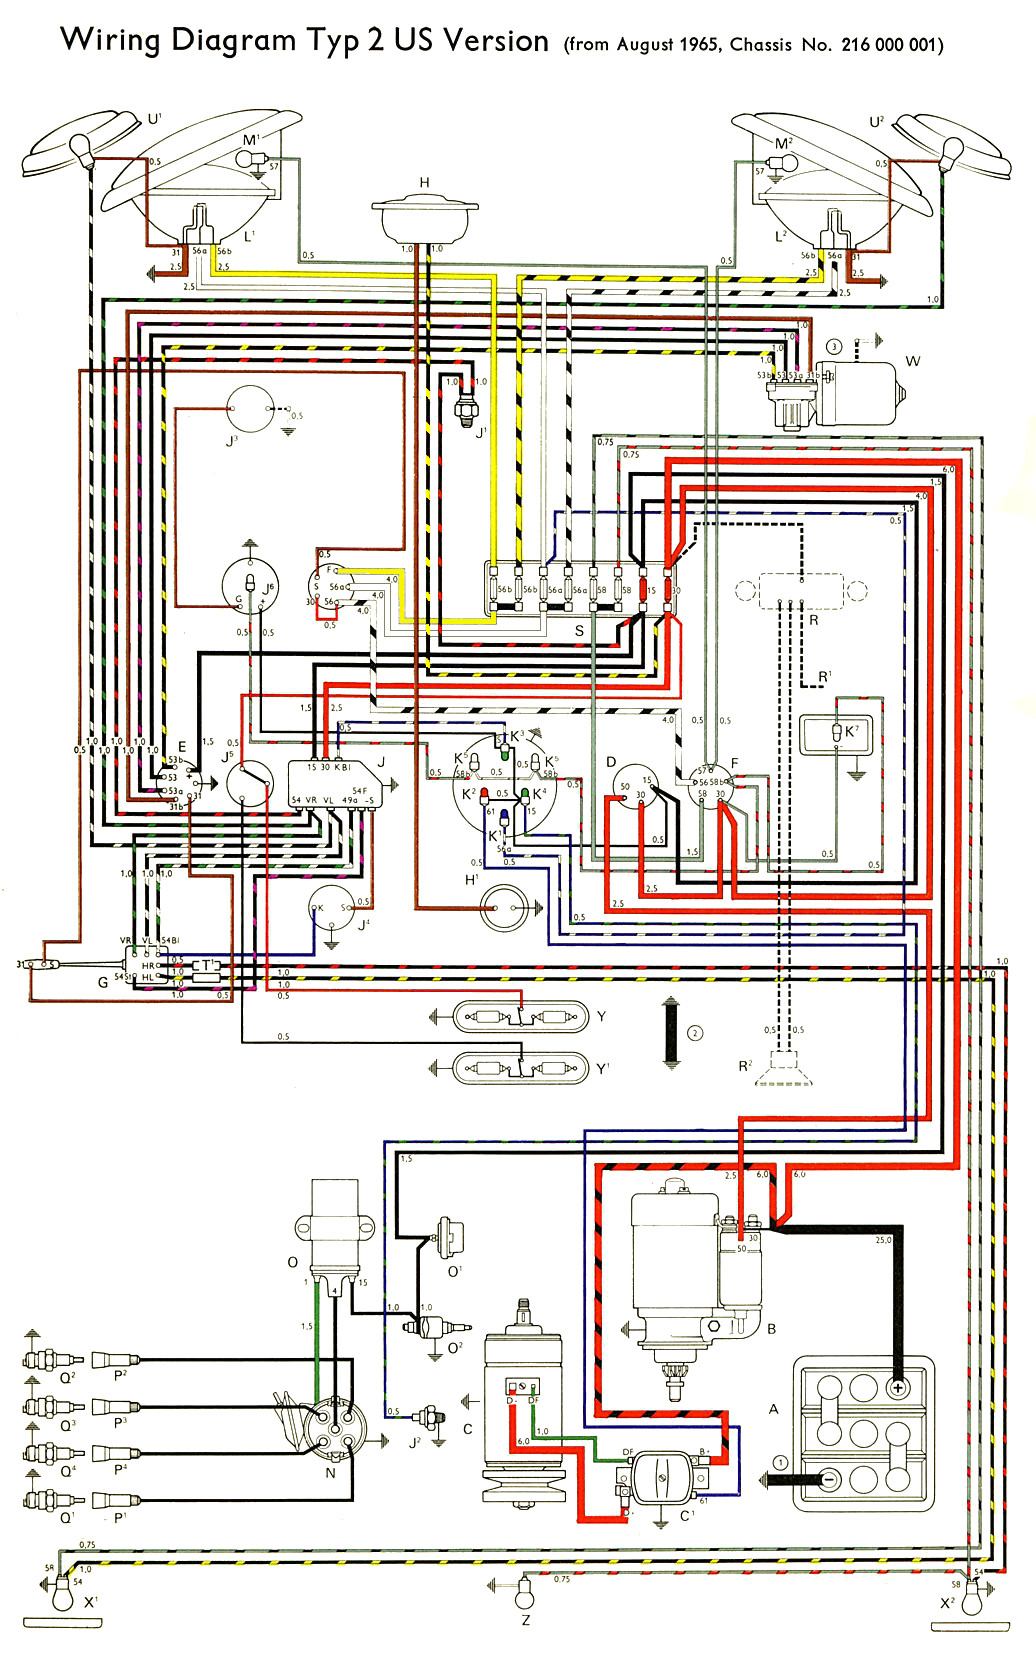 ahp proofer wiring diagram